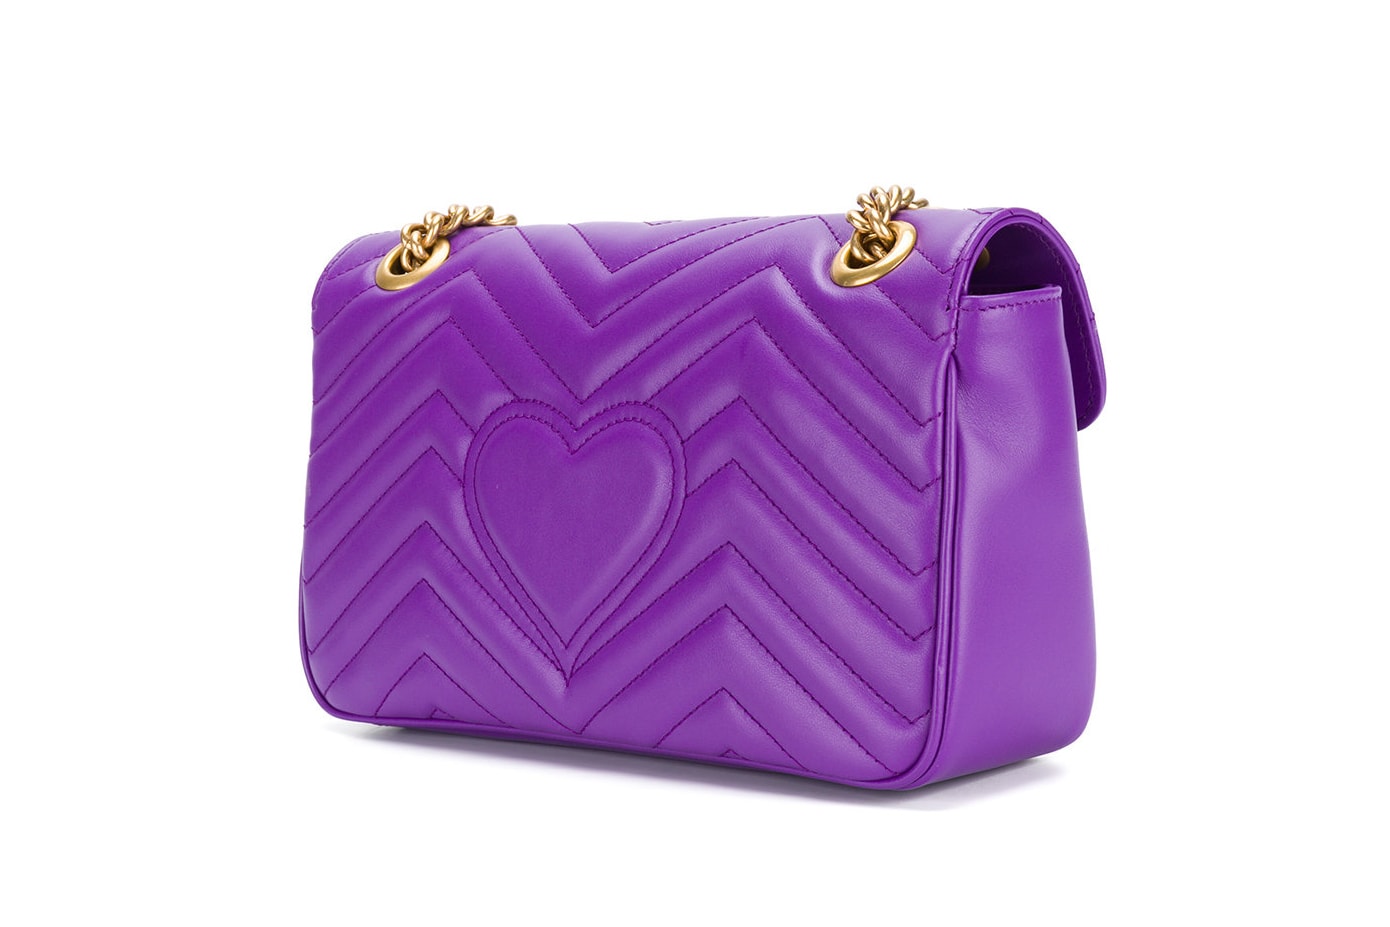 Gucci GG Marmont Ultra Violet Purple Bag Alessandro Michele